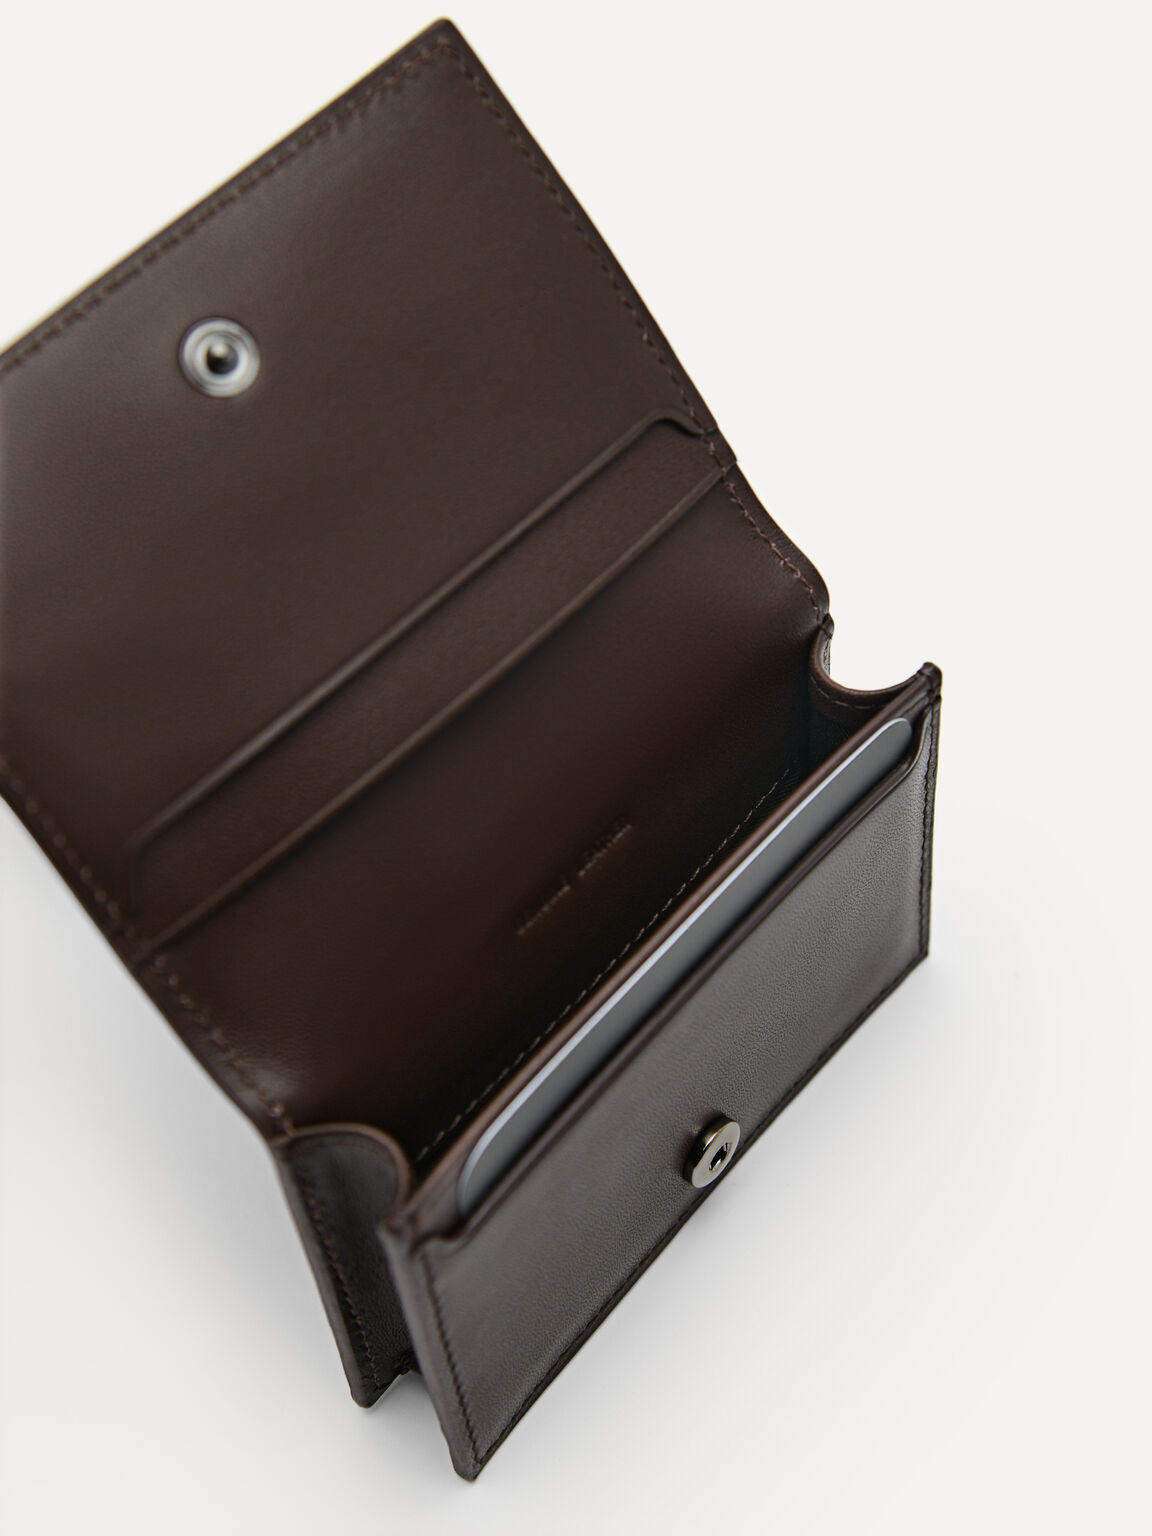 PEDRO Icon Leather Card Holder, Dark Brown, hi-res